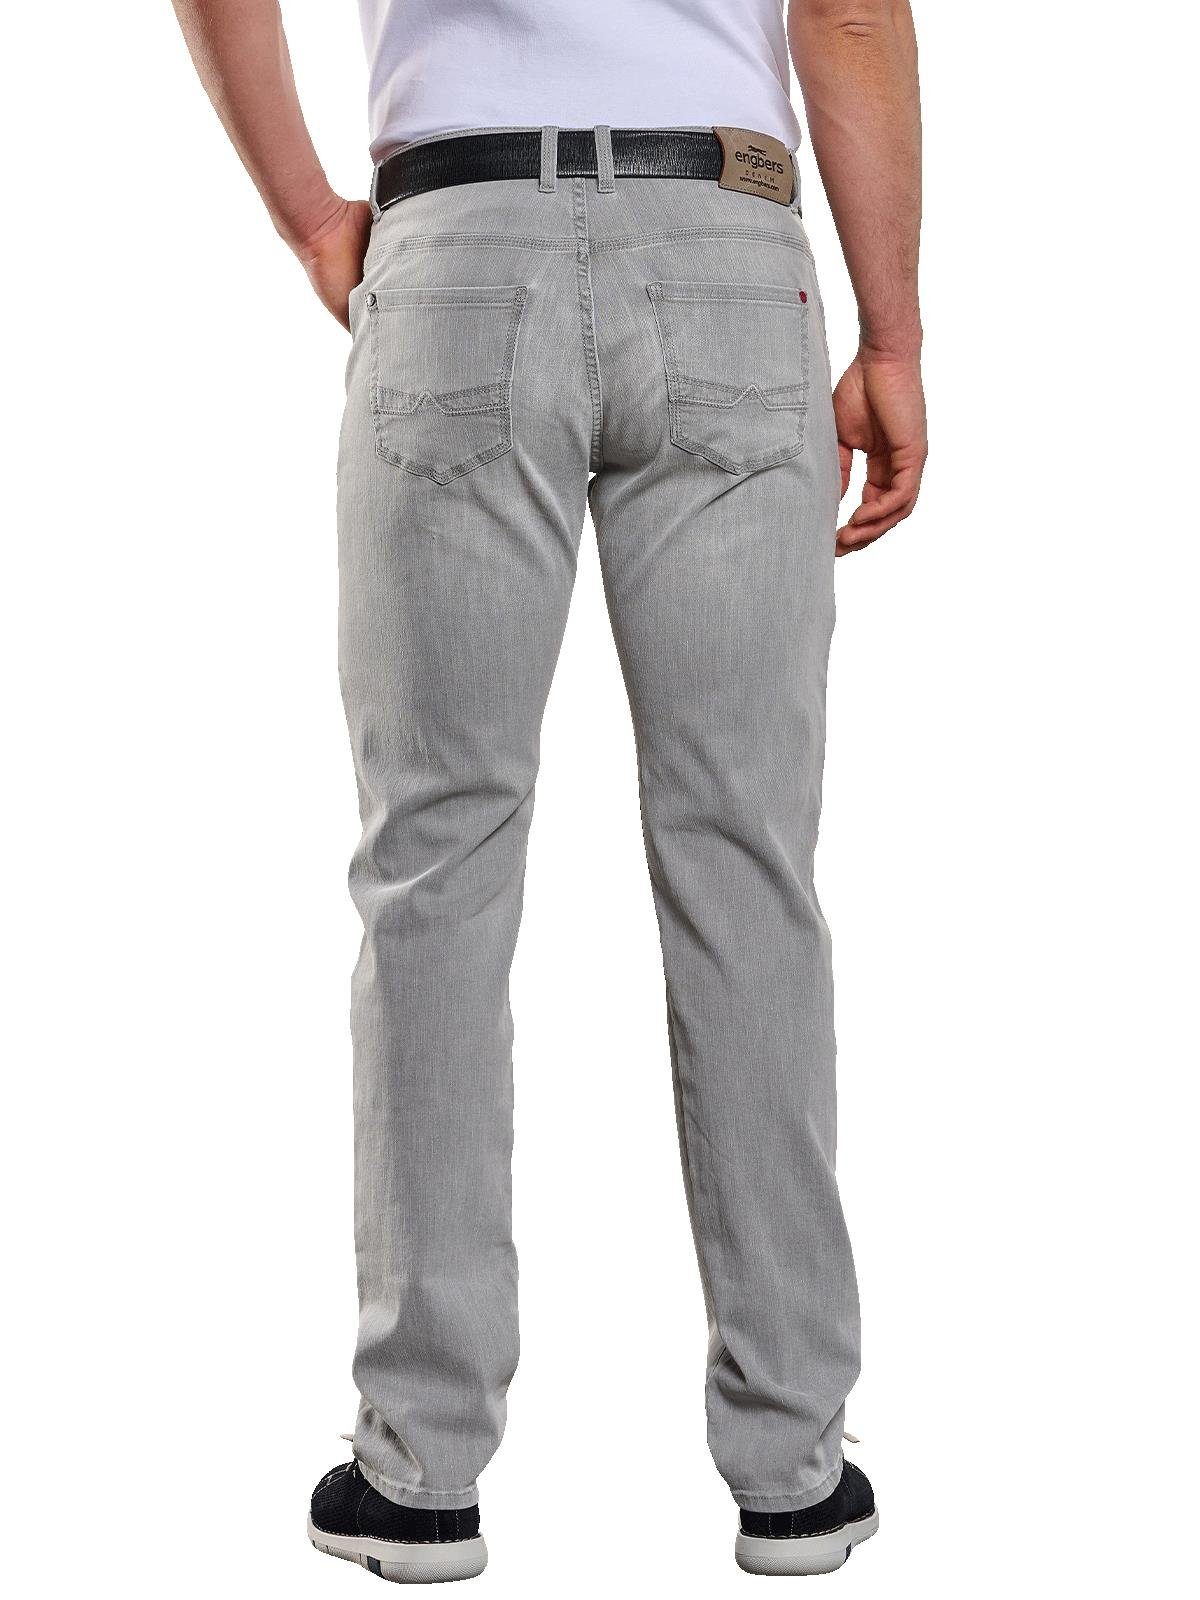 Herren Jeans Engbers Stretch-Jeans Jeans 5-Pocket Super-Stretch